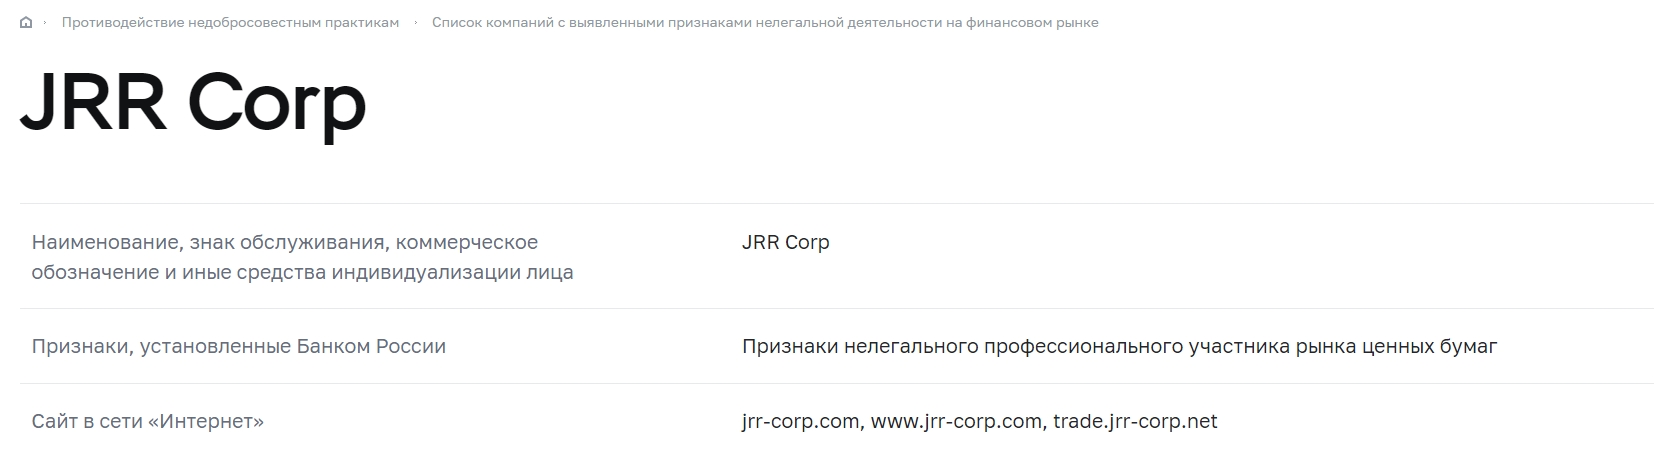 Результаты проверки статуса JRR Corp на портале ЦБ РФ